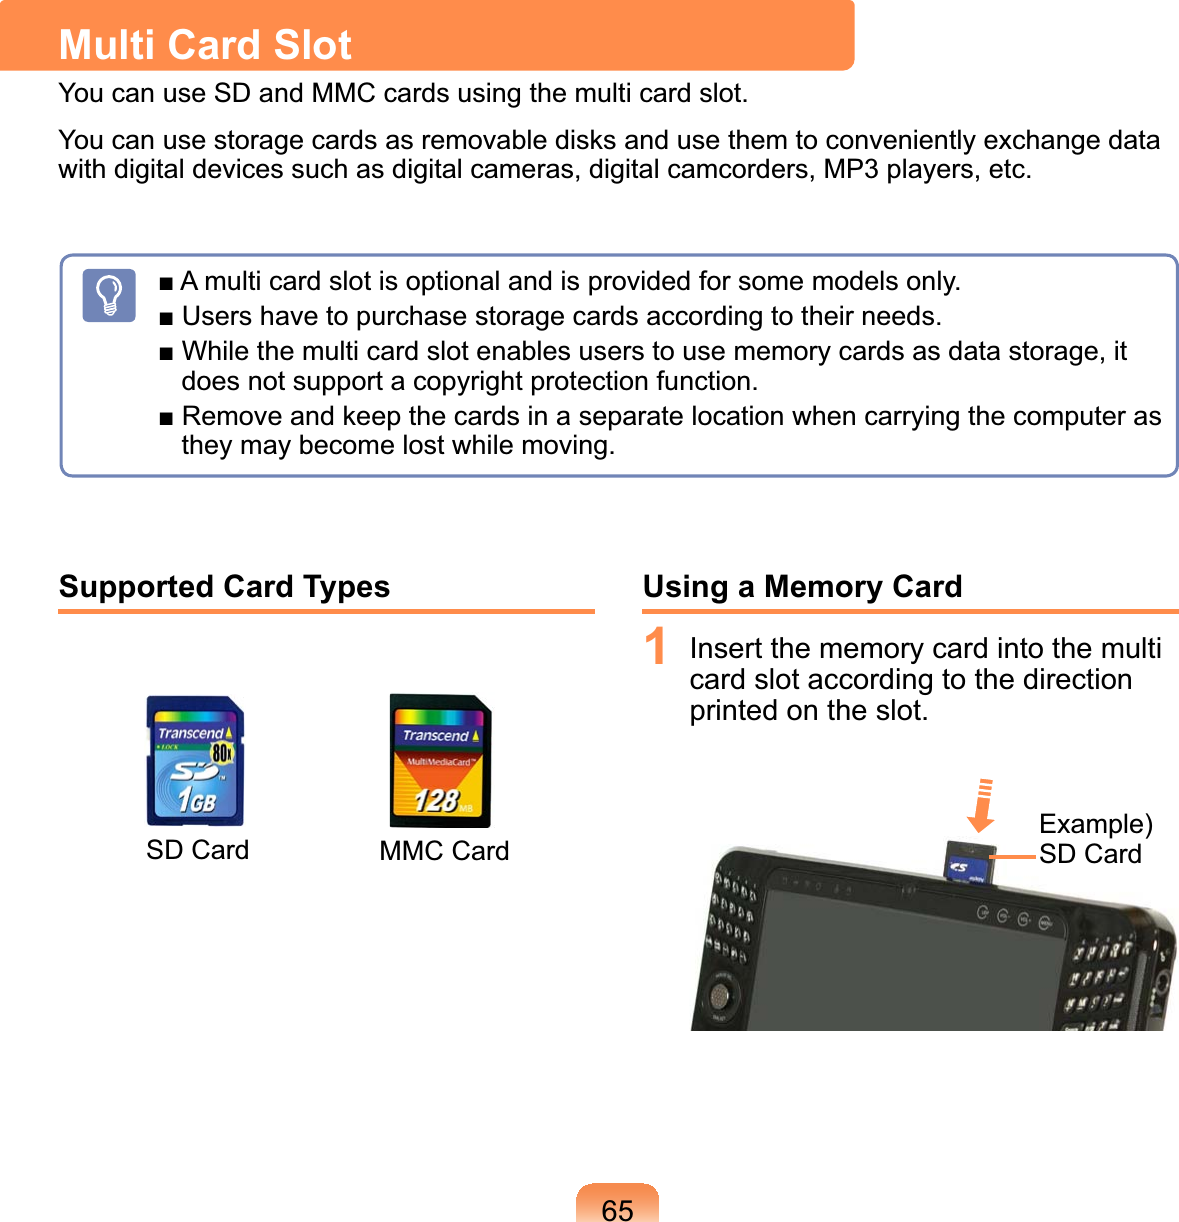 Supported Card Types Using a Memory Card1 ,QVHUWWKHPHPRU\FDUGLQWRWKHPXOWLFDUGVORWDFFRUGLQJWRWKHGLUHFWLRQSULQWHGRQWKHVORW([DPSOH6&apos;&amp;DUGMulti Card Slot&lt;RXFDQXVH6&apos;DQG00&amp;FDUGVXVLQJWKHPXOWLFDUGVORW&lt;RXFDQXVHVWRUDJHFDUGVDVUHPRYDEOHGLVNVDQGXVHWKHPWRFRQYHQLHQWO\H[FKDQJHGDWDZLWKGLJLWDOGHYLFHVVXFKDVGLJLWDOFDPHUDVGLJLWDOFDPFRUGHUV03SOD\HUVHWFŶ$PXOWLFDUGVORWLVRSWLRQDODQGLVSURYLGHGIRUVRPHPRGHOVRQO\Ŷ8VHUVKDYHWRSXUFKDVHVWRUDJHFDUGVDFFRUGLQJWRWKHLUQHHGVŶ:KLOHWKHPXOWLFDUGVORWHQDEOHVXVHUVWRXVHPHPRU\FDUGVDVGDWDVWRUDJHLWGRHVQRWVXSSRUWDFRS\ULJKWSURWHFWLRQIXQFWLRQŶ5HPRYHDQGNHHSWKHFDUGVLQDVHSDUDWHORFDWLRQZKHQFDUU\LQJWKHFRPSXWHUDVWKH\PD\EHFRPHORVWZKLOHPRYLQJ6&apos;&amp;DUG 00&amp;&amp;DUG